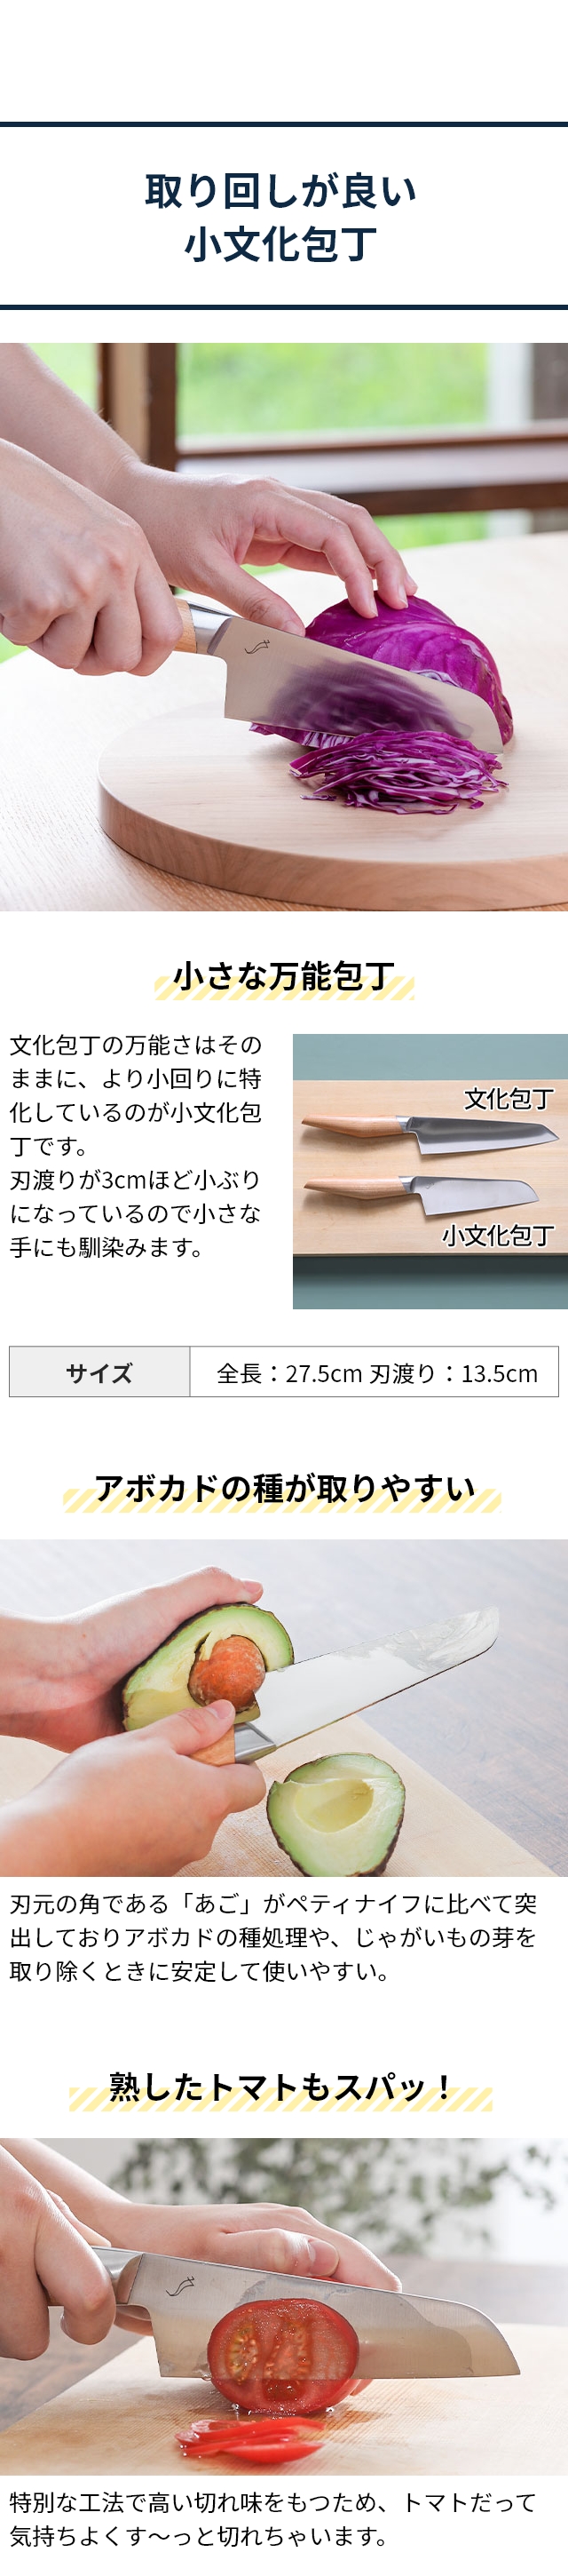 kasane (カサネ) 小文化包丁 13.5cm